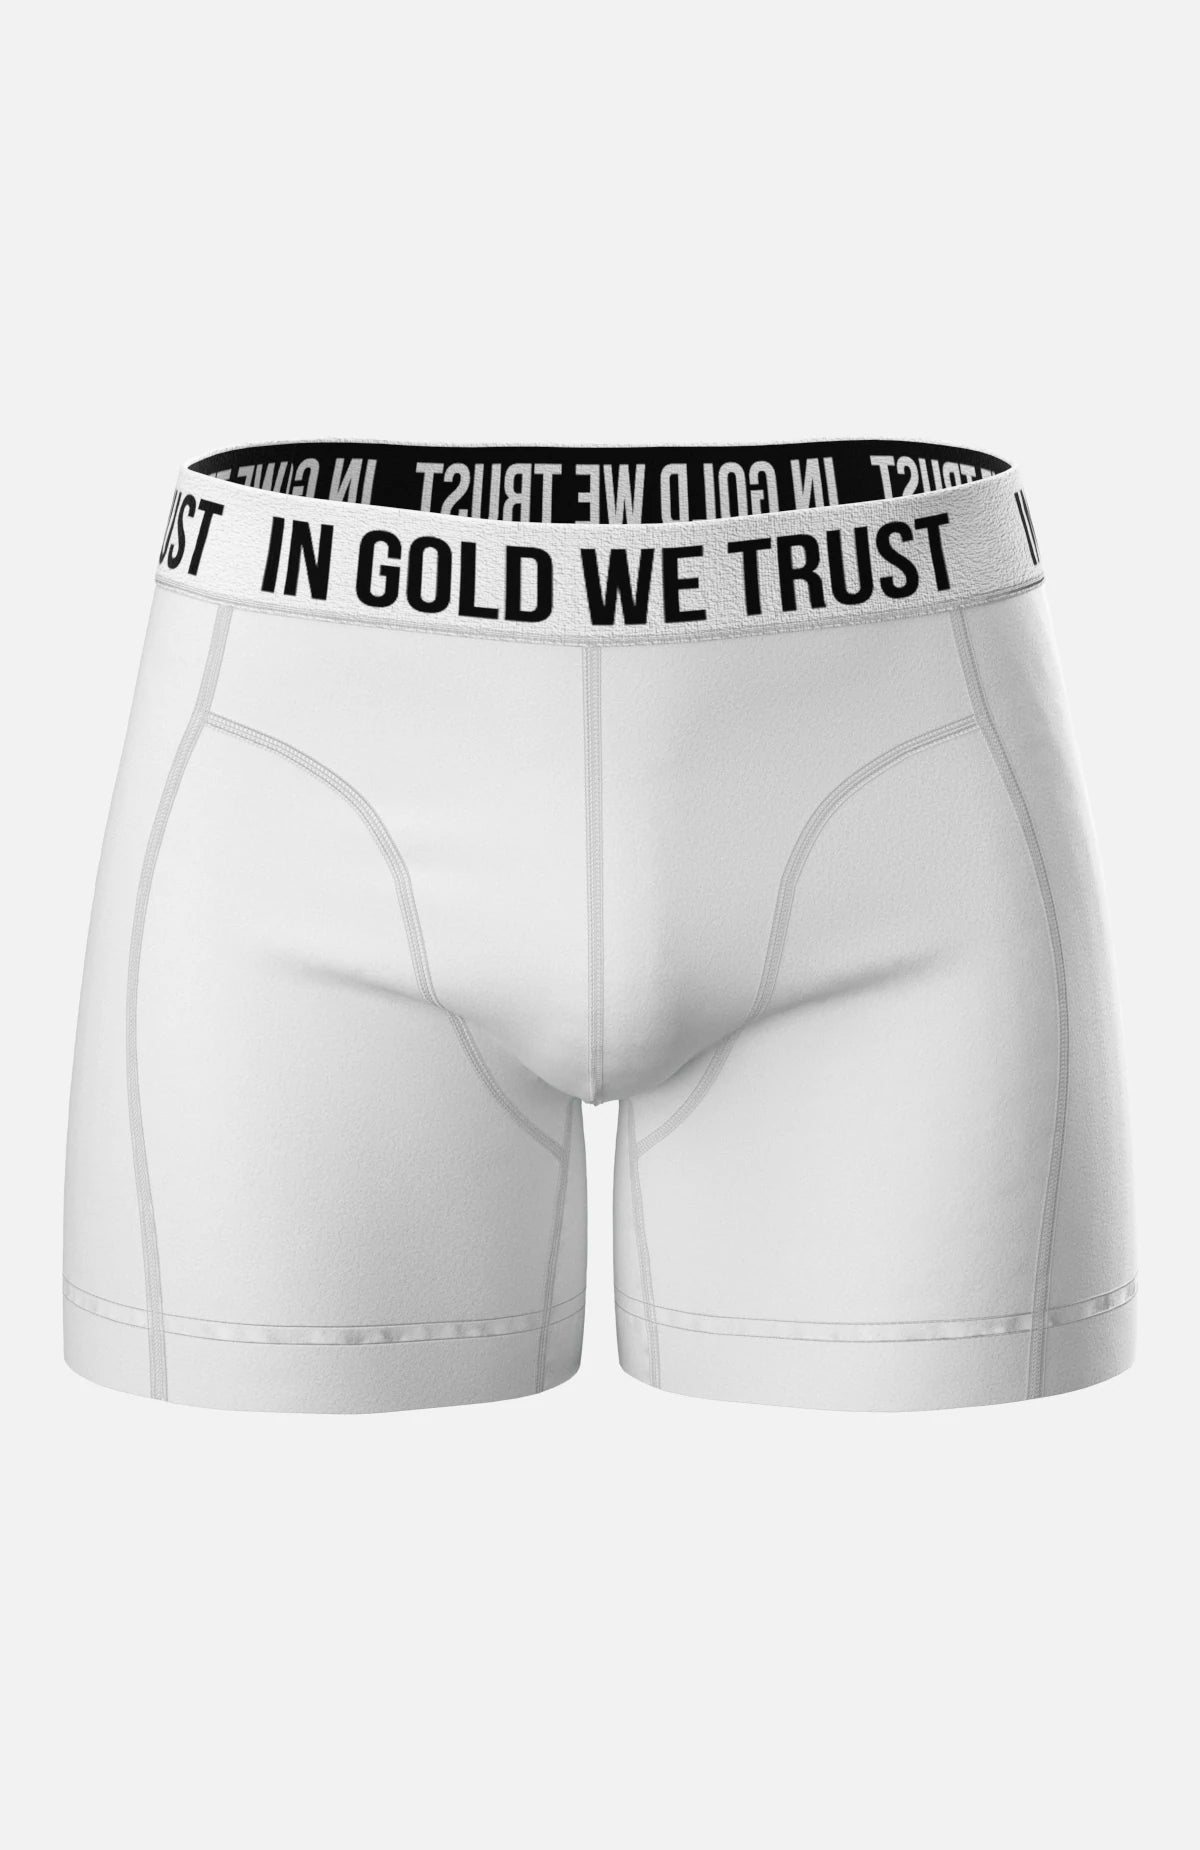 Overtreding Getand Bewijzen In Gold We Trust Boxer 3-Pack Blanc De Blanc